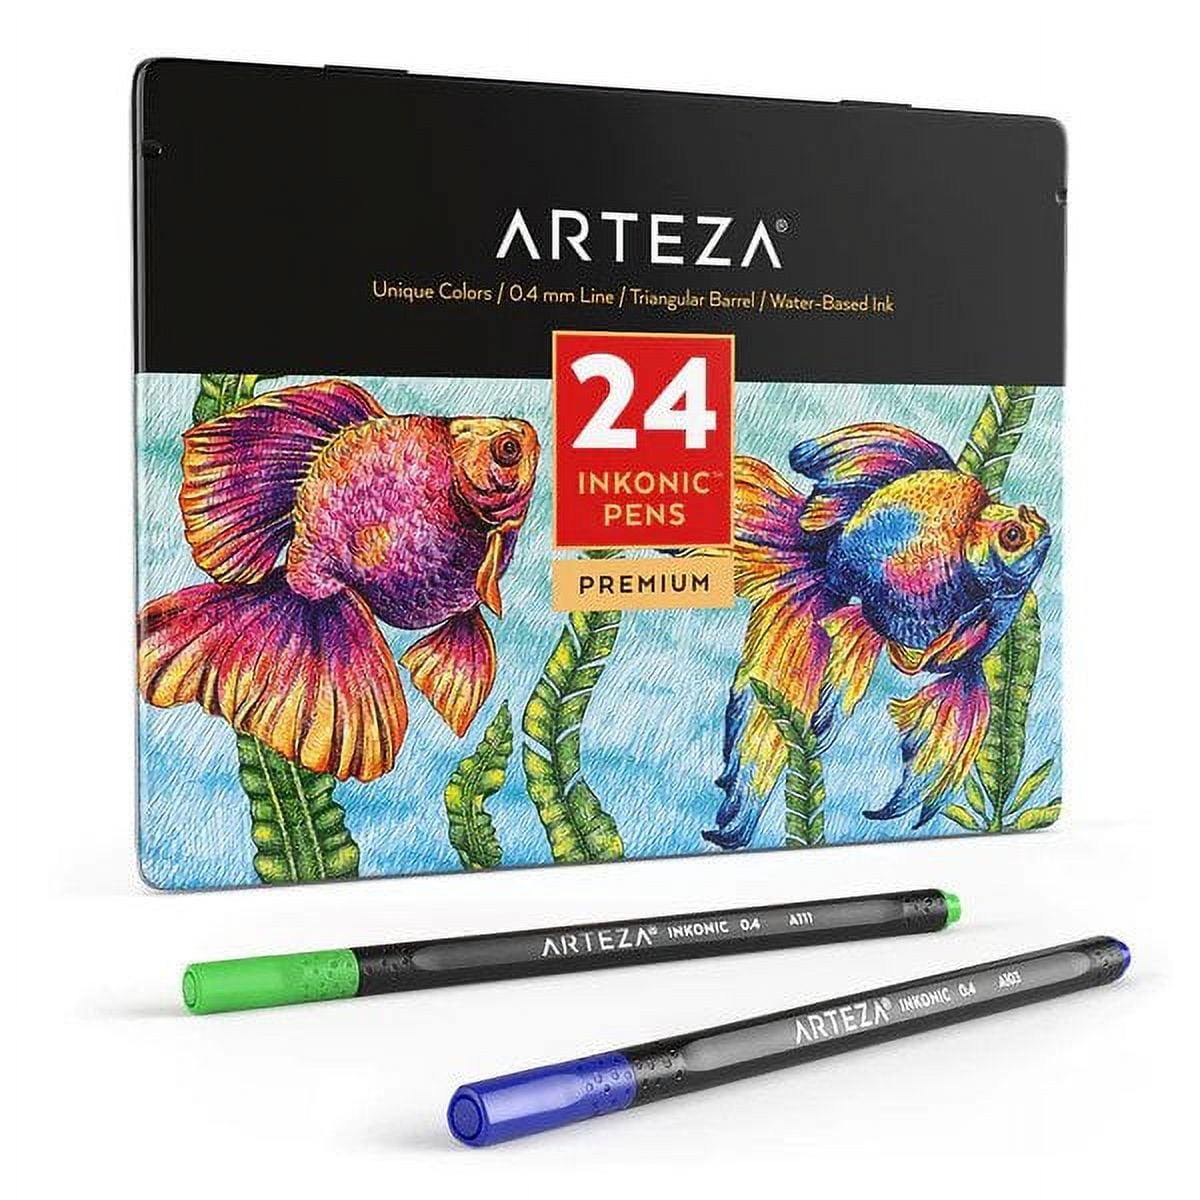 Sharpie 24pk Felt Pens 0.4mm Fine Tip Multicolored 24 ct